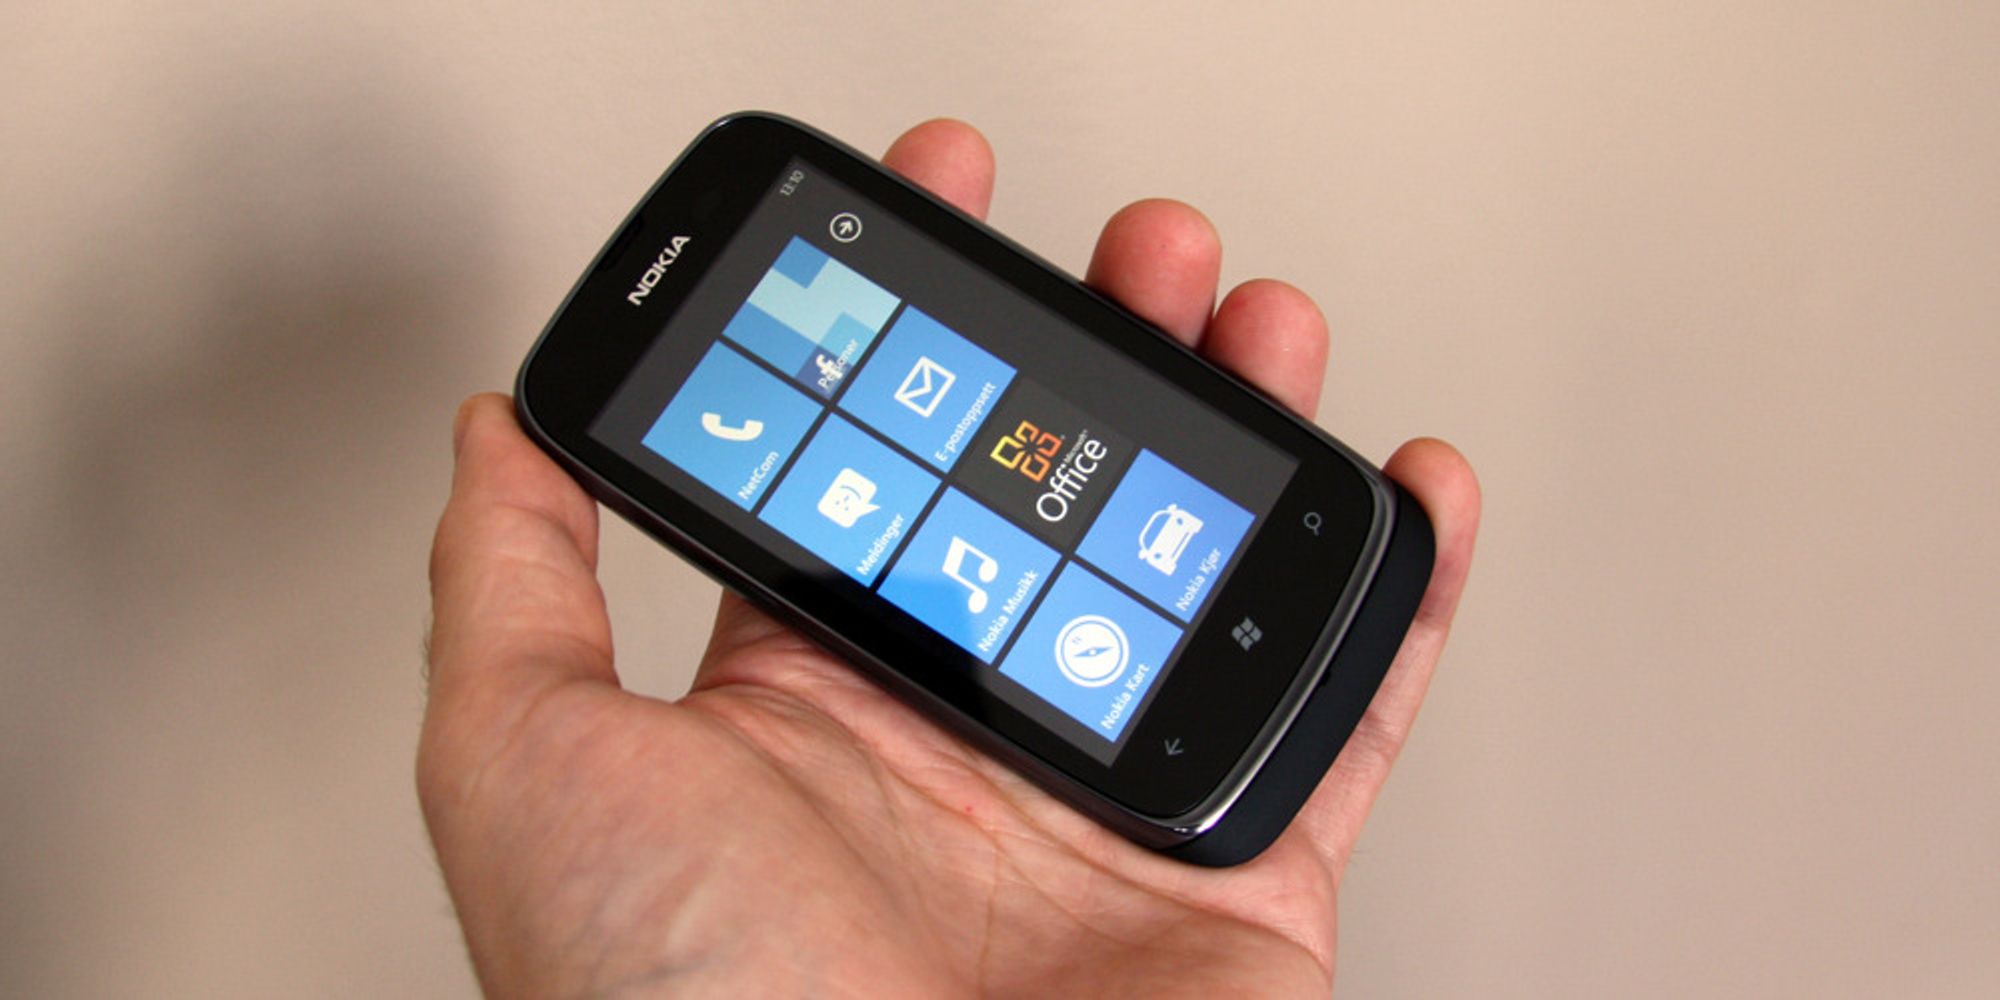 Unboxing: Nokia Lumia 610